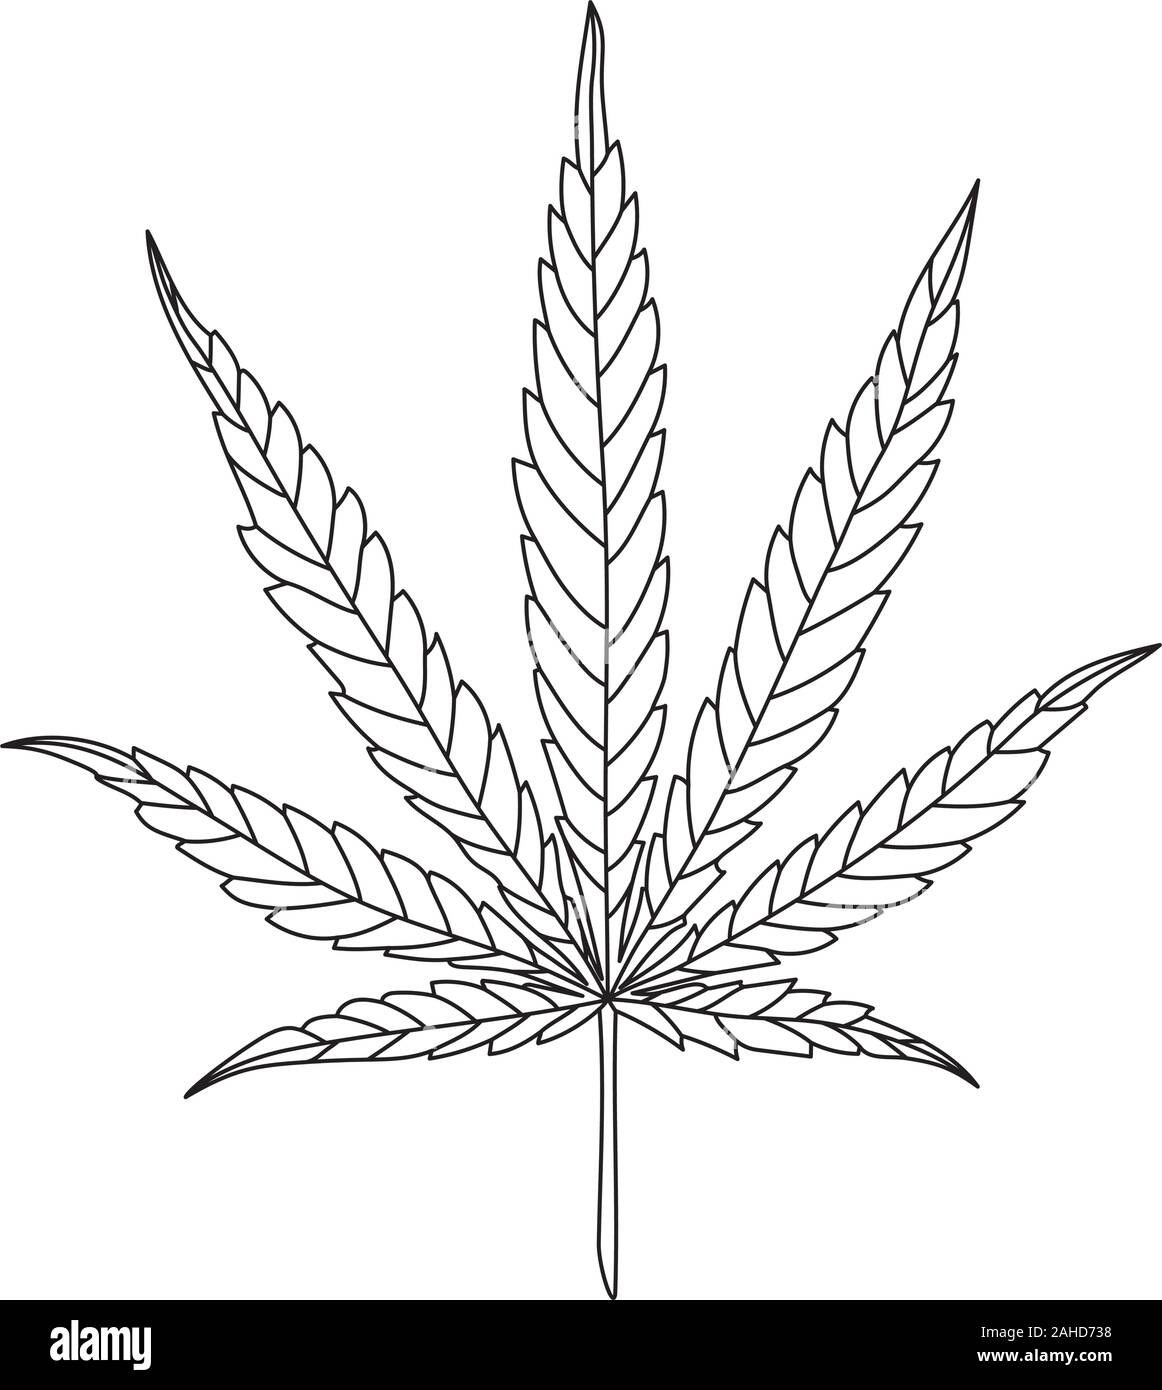 Hemp Leaf Line Drawing isolated on White Background. CBD, Cannabis design logo Stock Vector